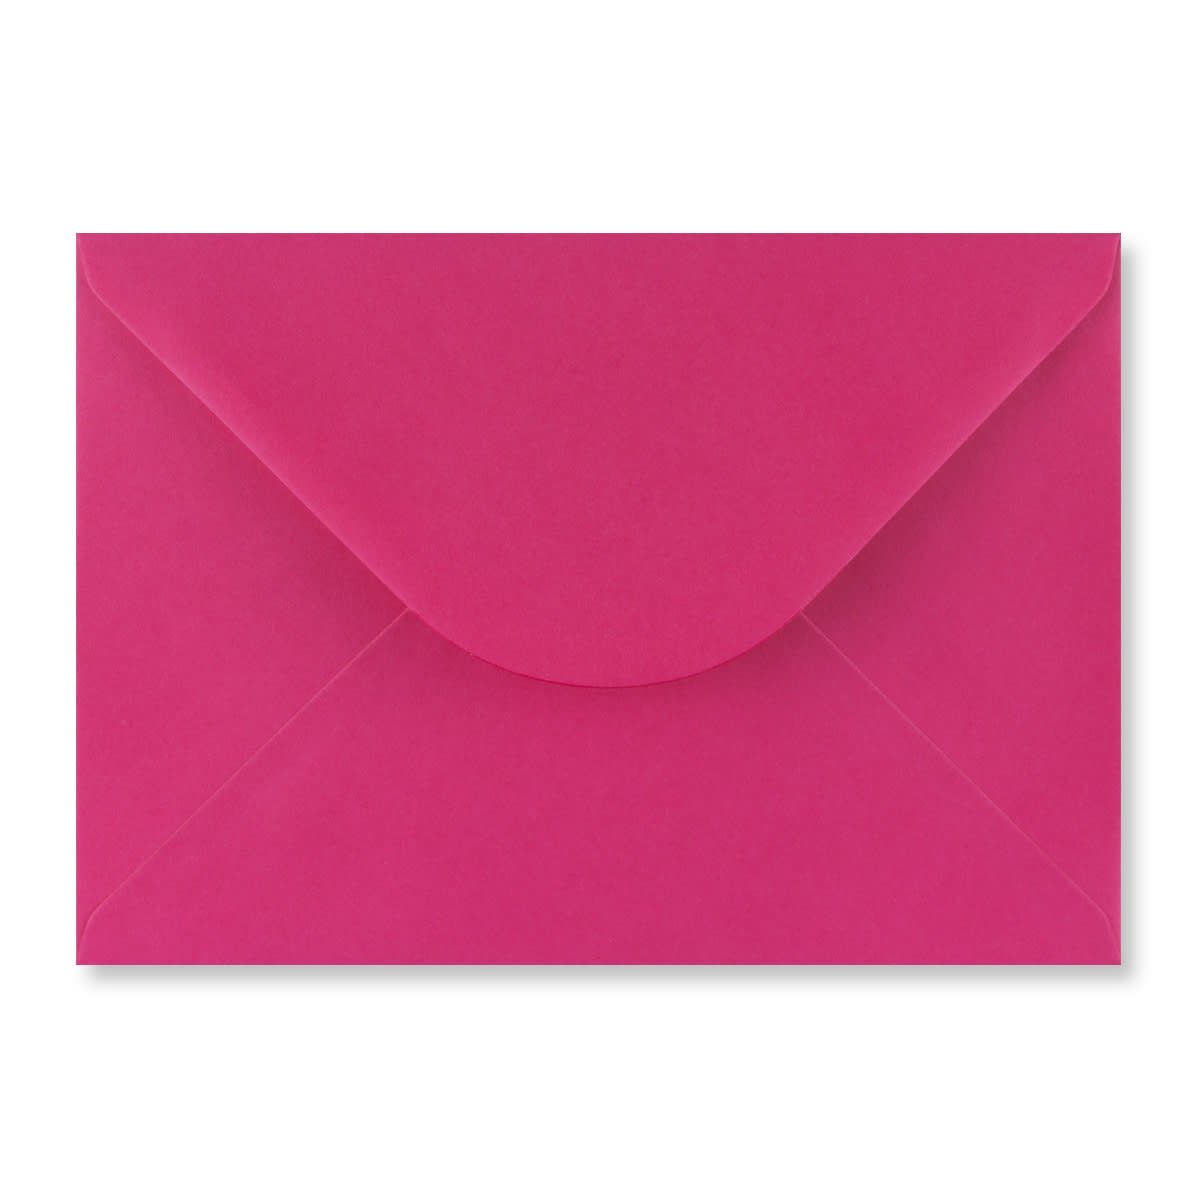 Fuchsia Pink 181 x 254mm Envelopes 100gsm